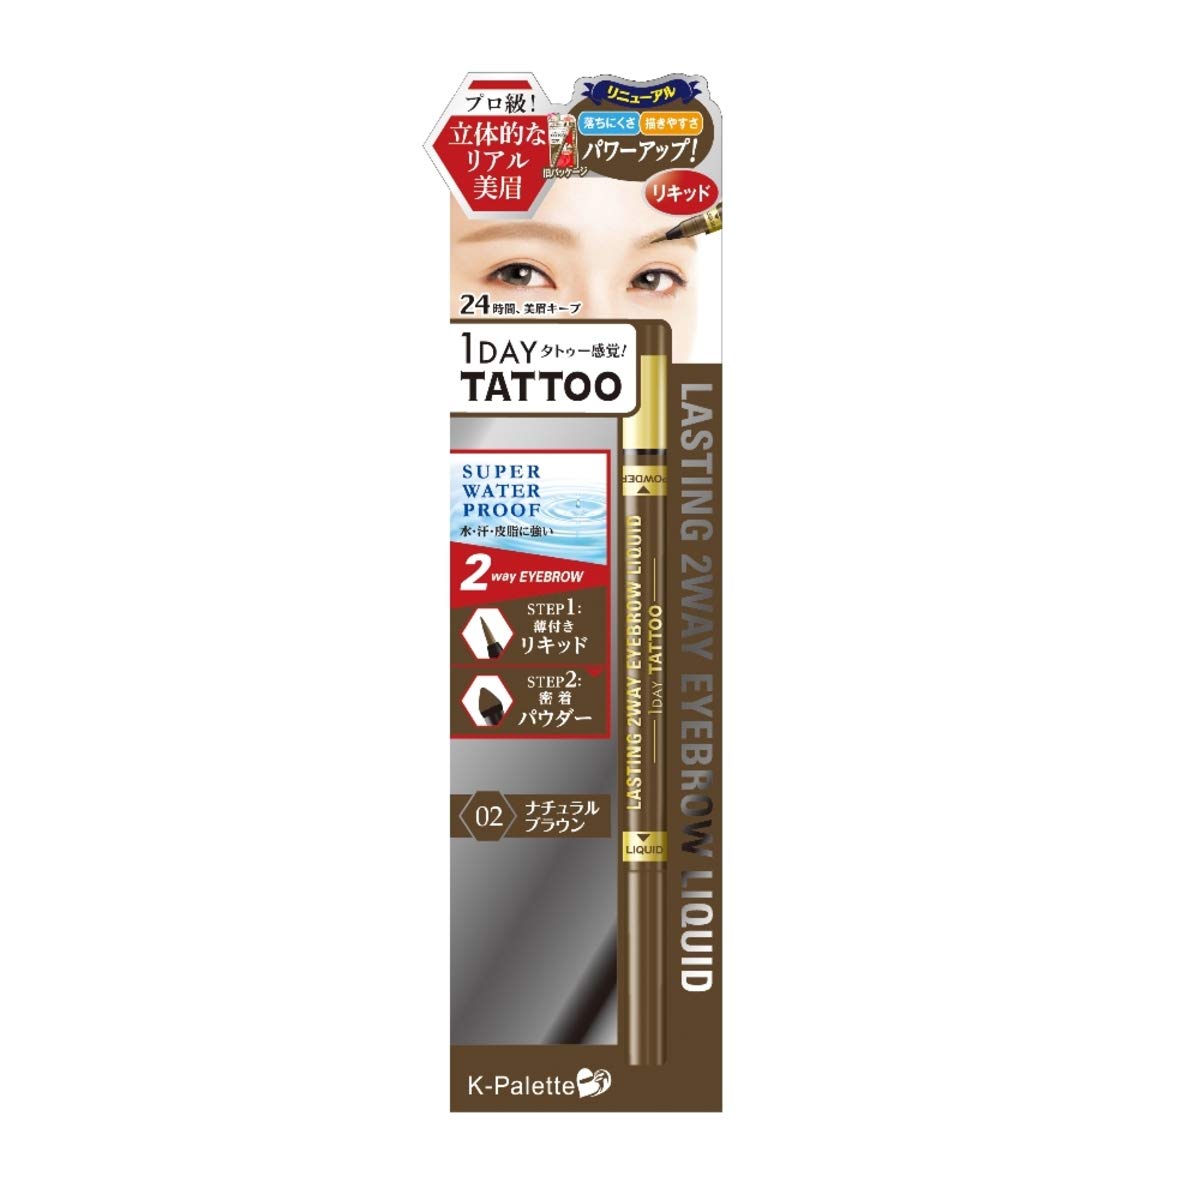 K Palette 1 day Tattoo LASTING 2-WAY EYEBROW Liquid & Powder #01 Light Brown